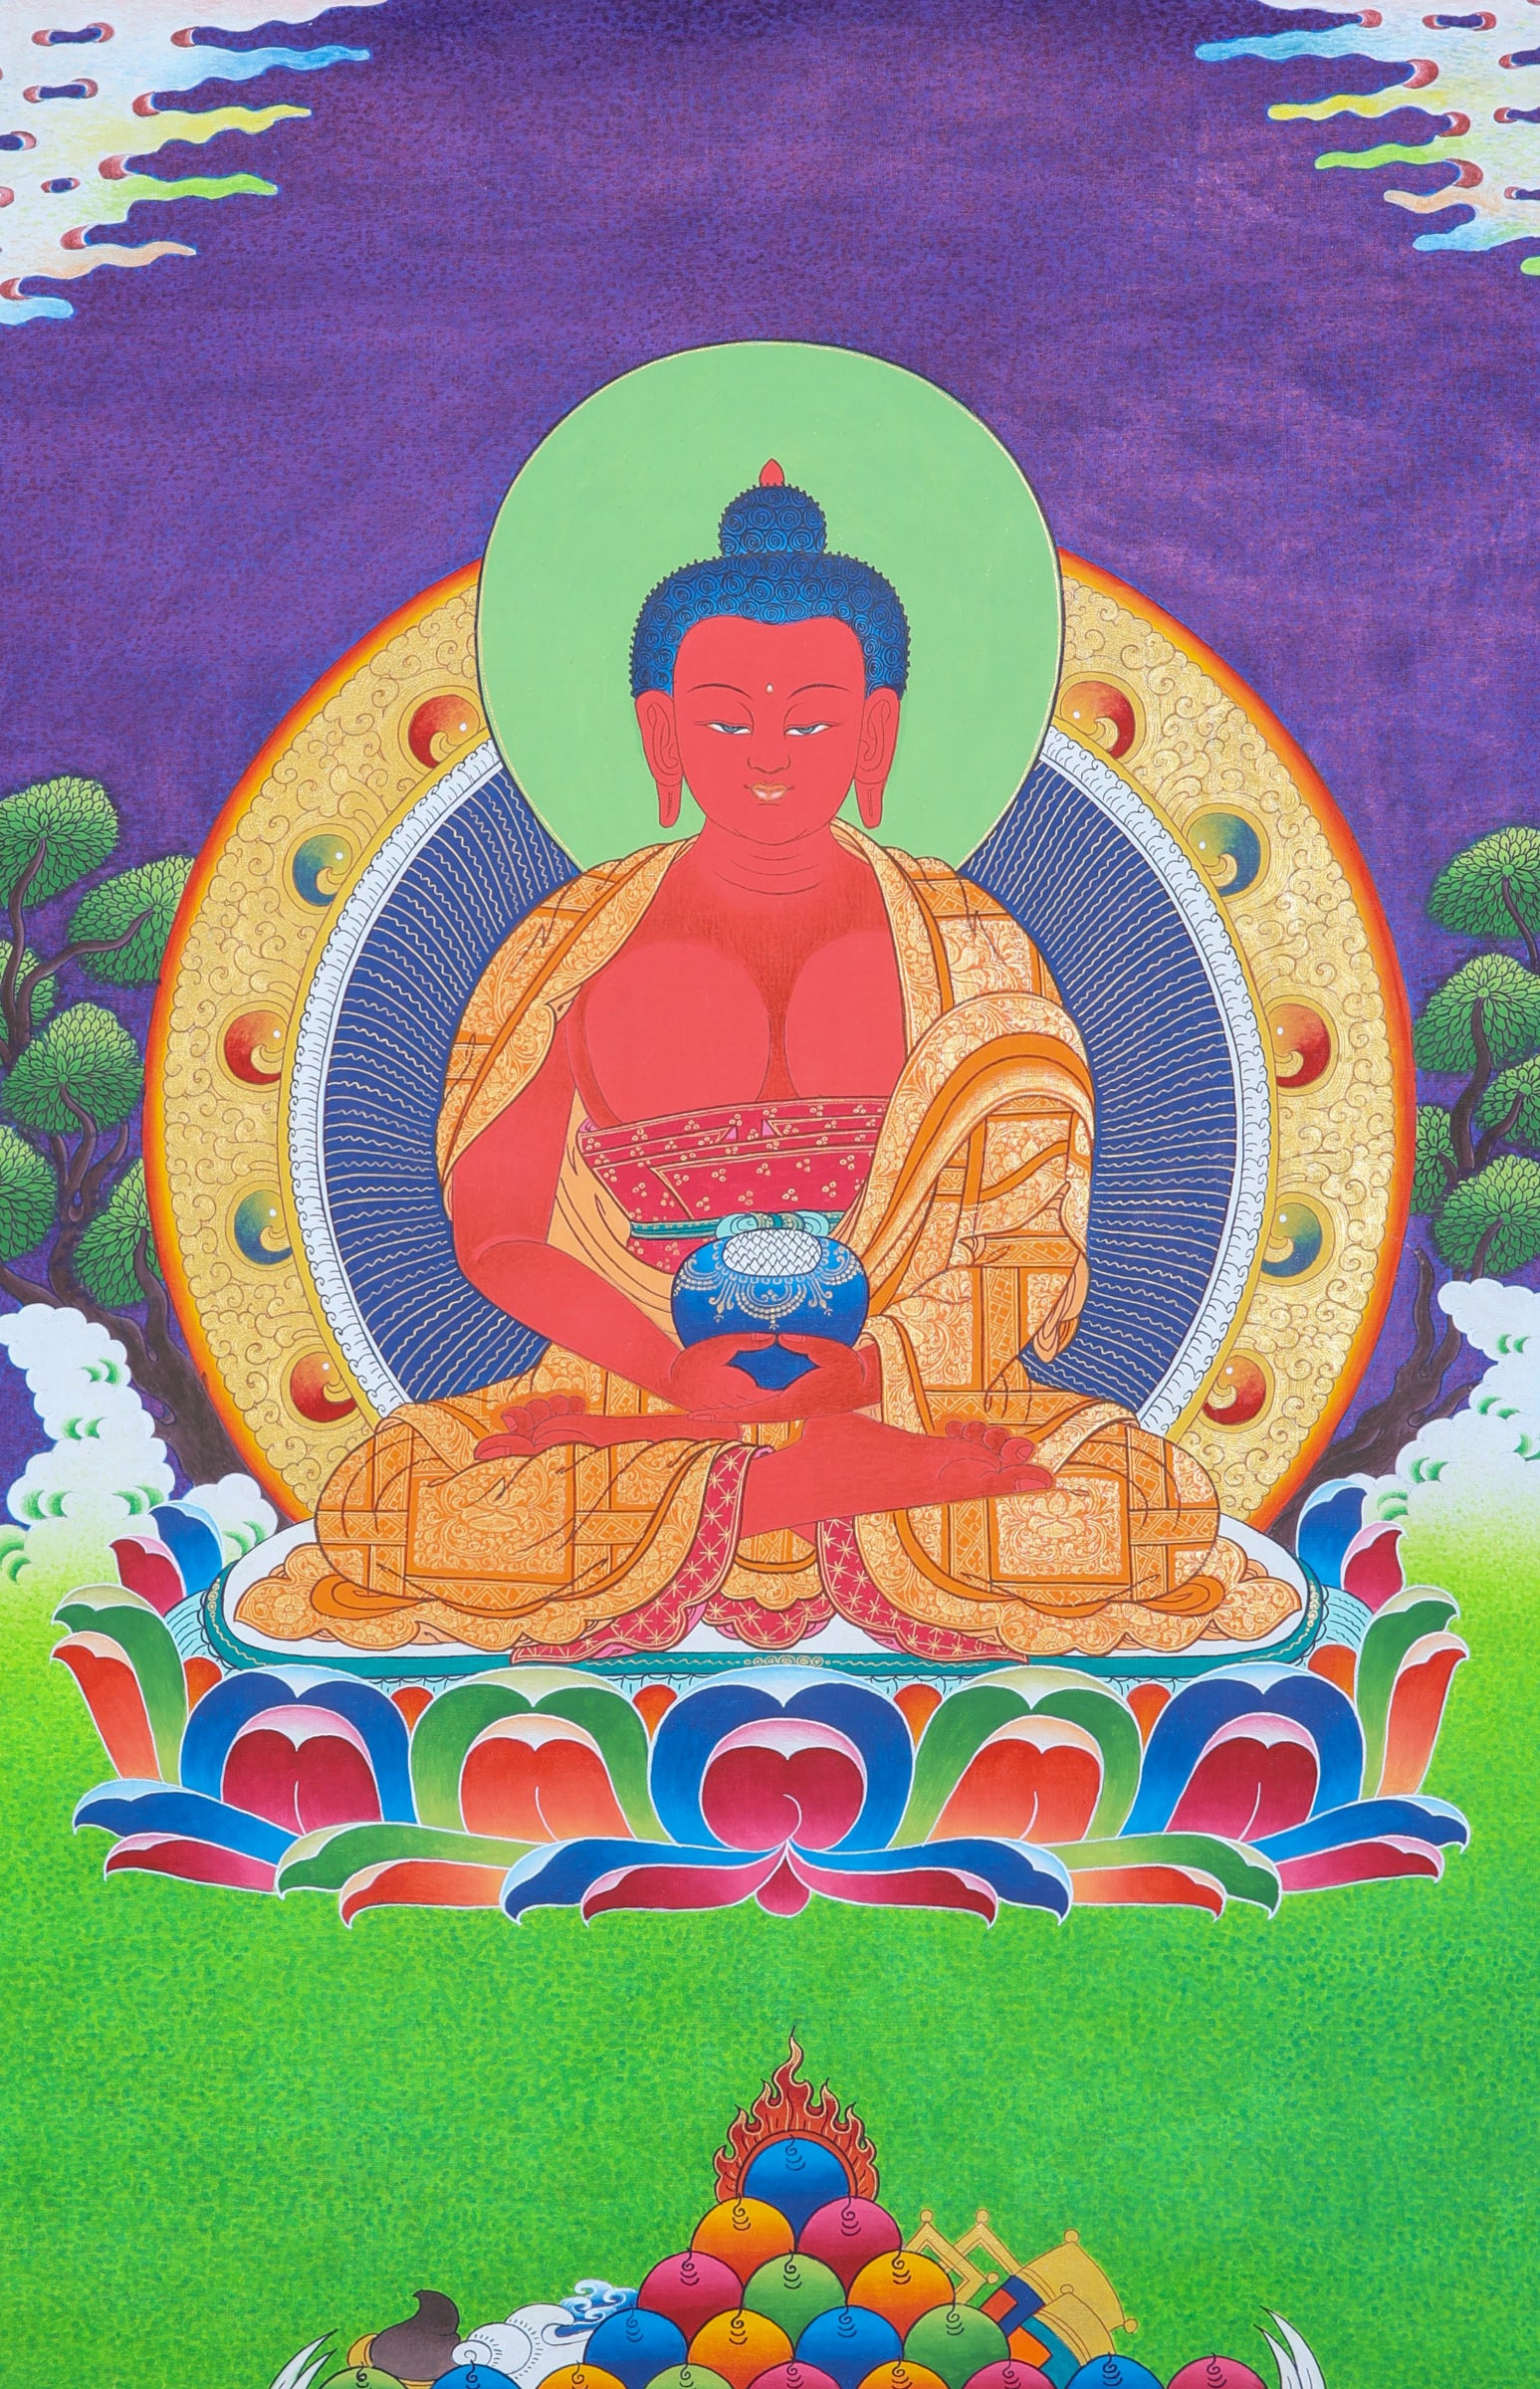 Amitabha Buddha Thangka Painting for prayer and devotion.